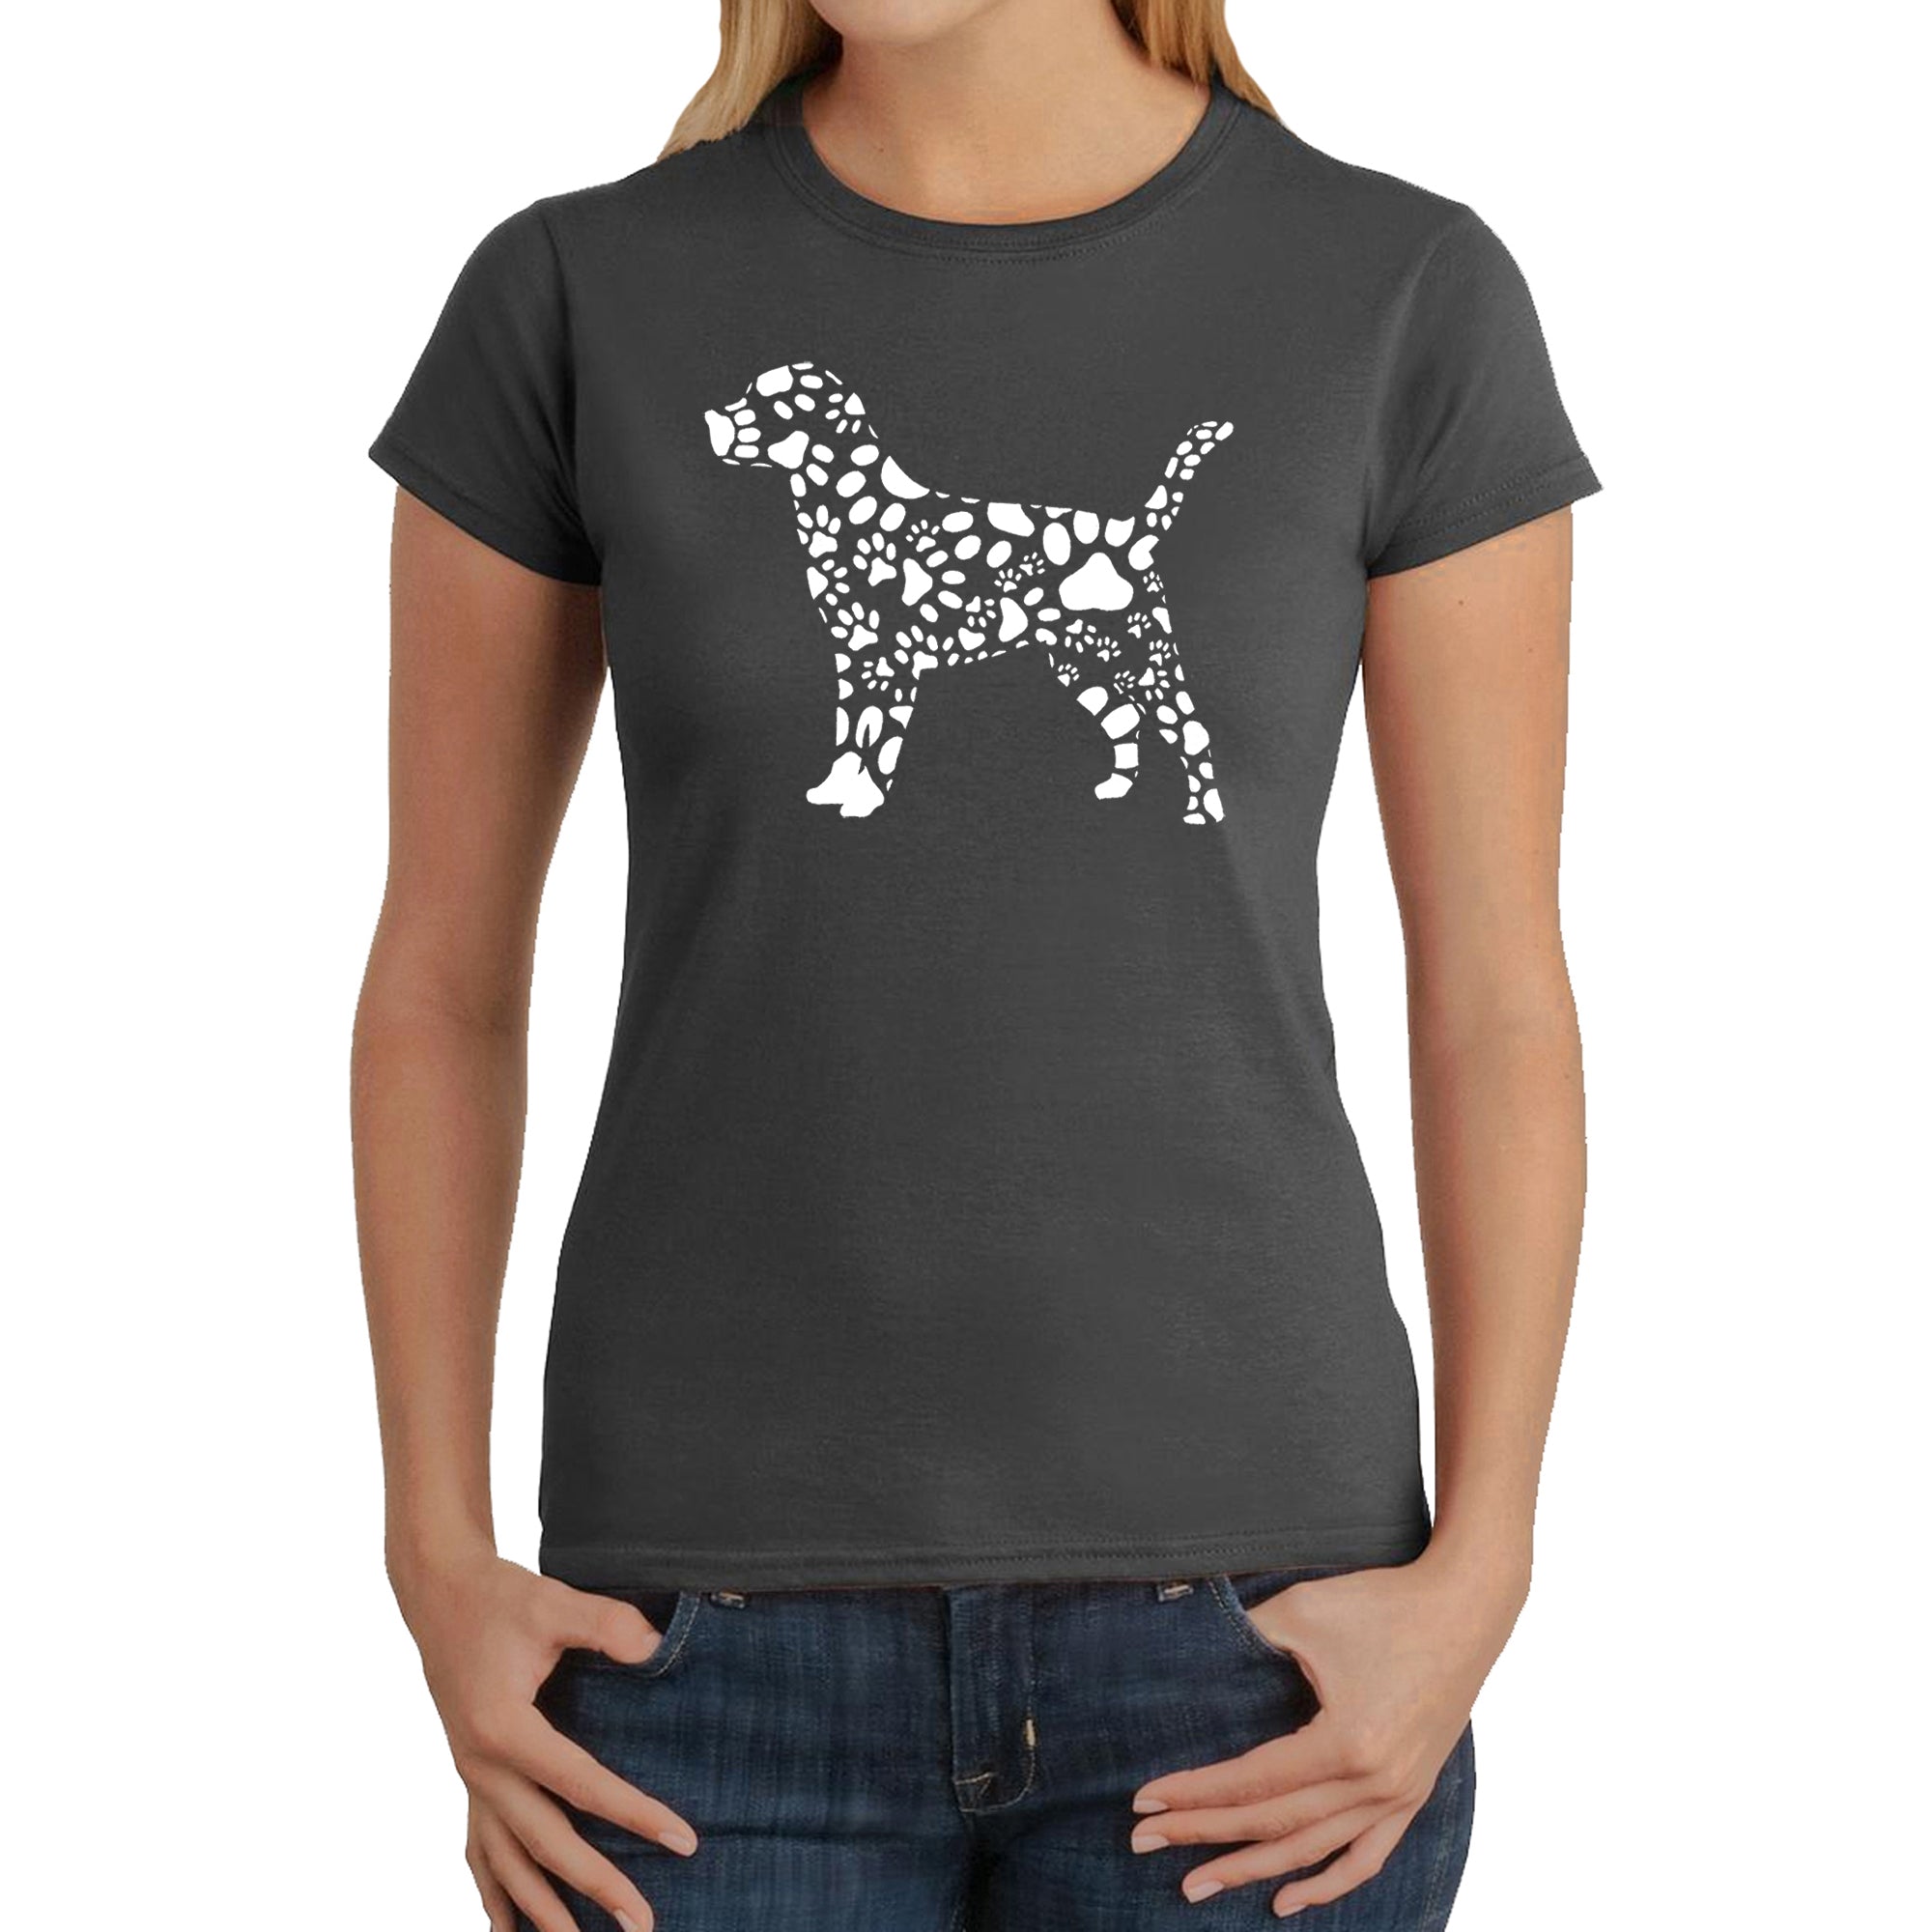 Dog Paw Prints - Women's Word Art T-Shirt - Grey - Large